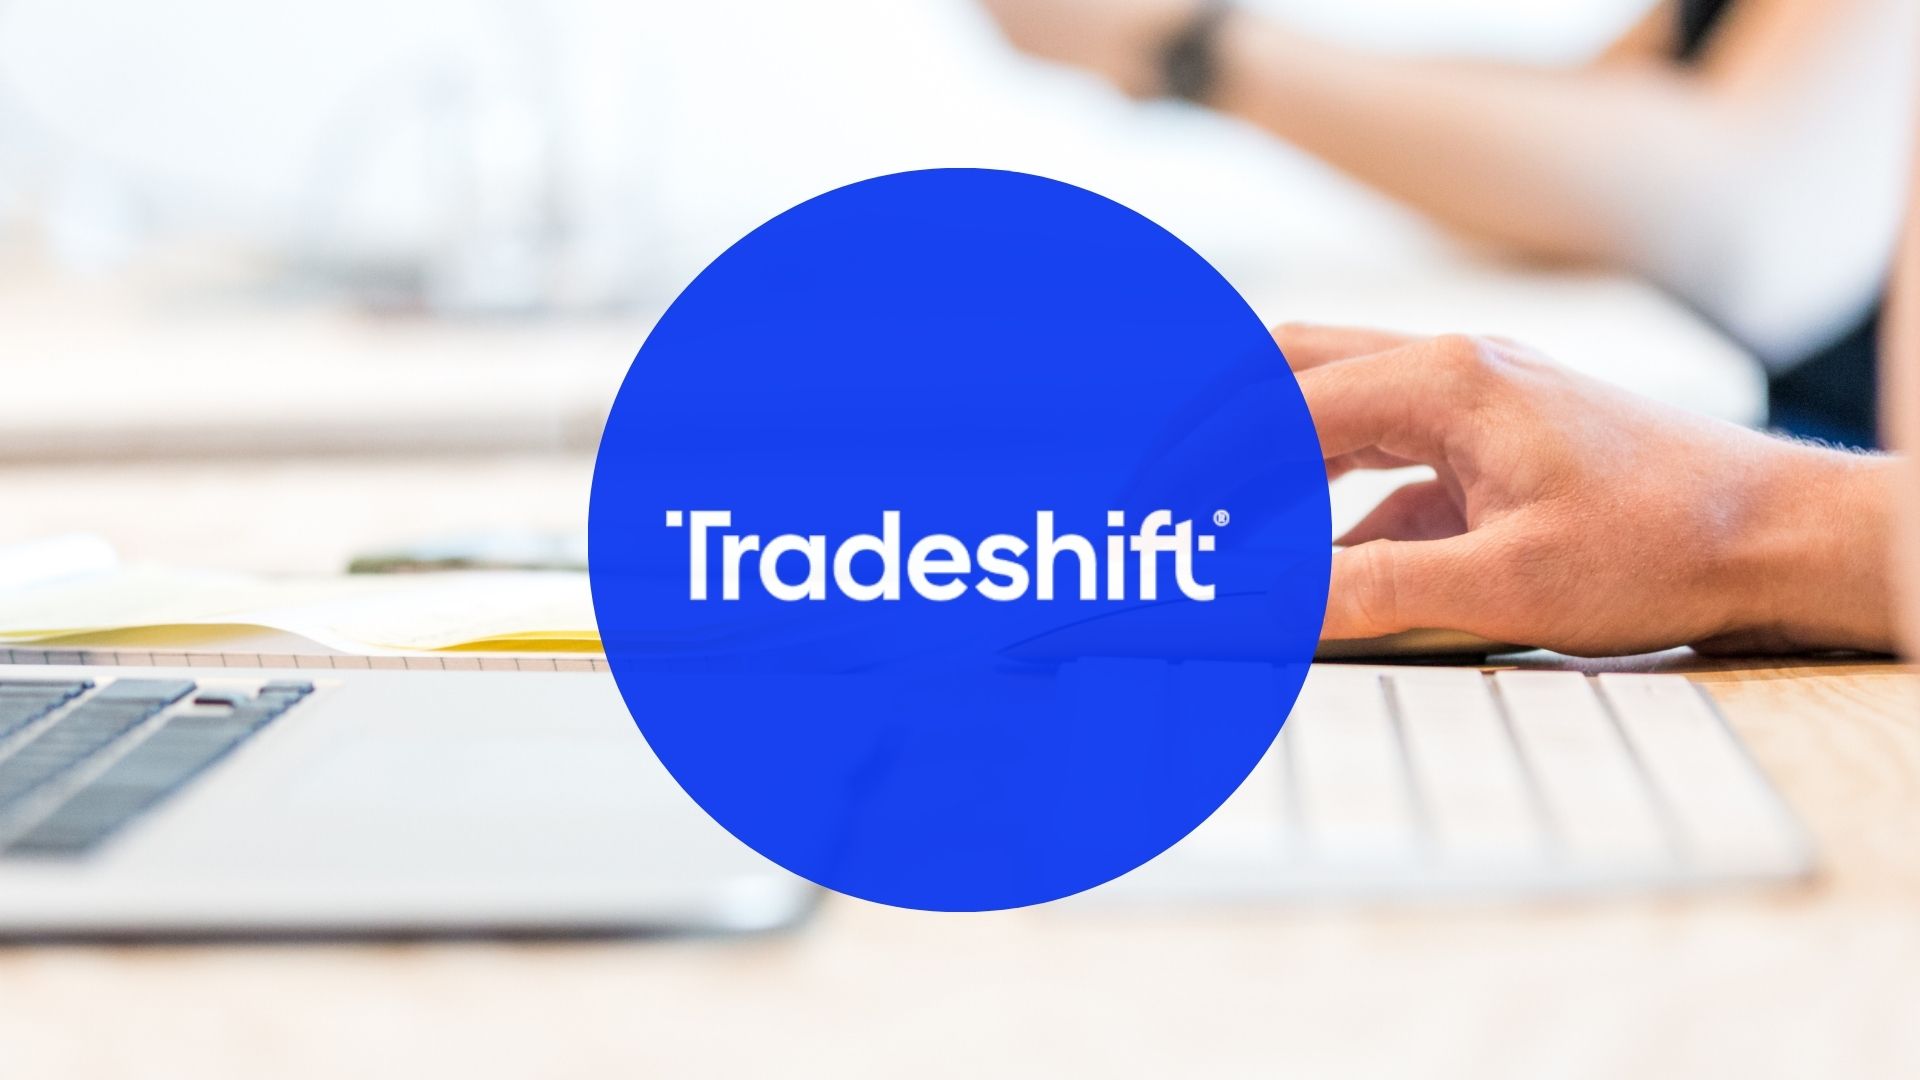 Tradeshift